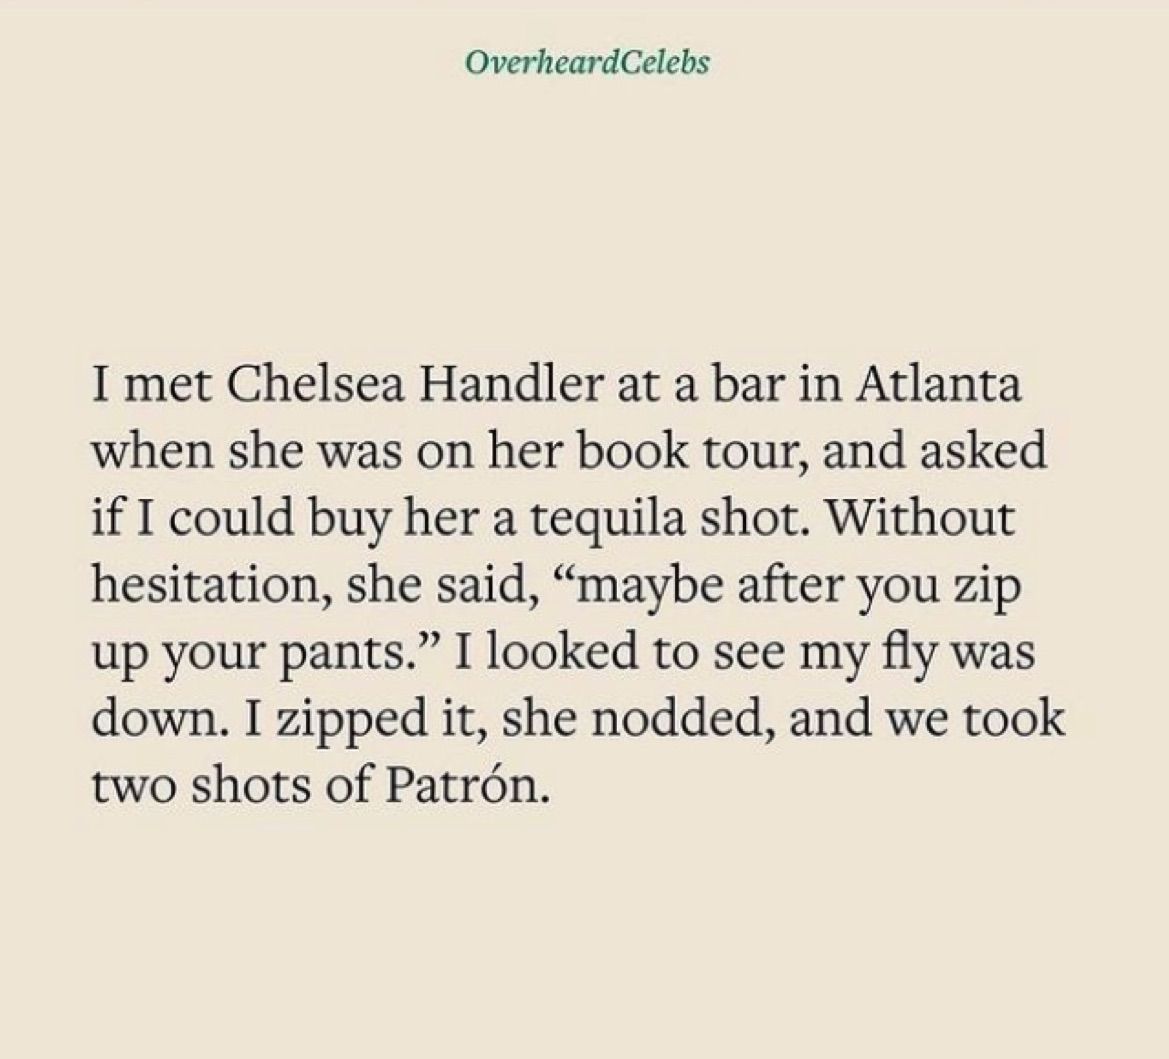 Ouvi a história do Celebs Chelsea Handler